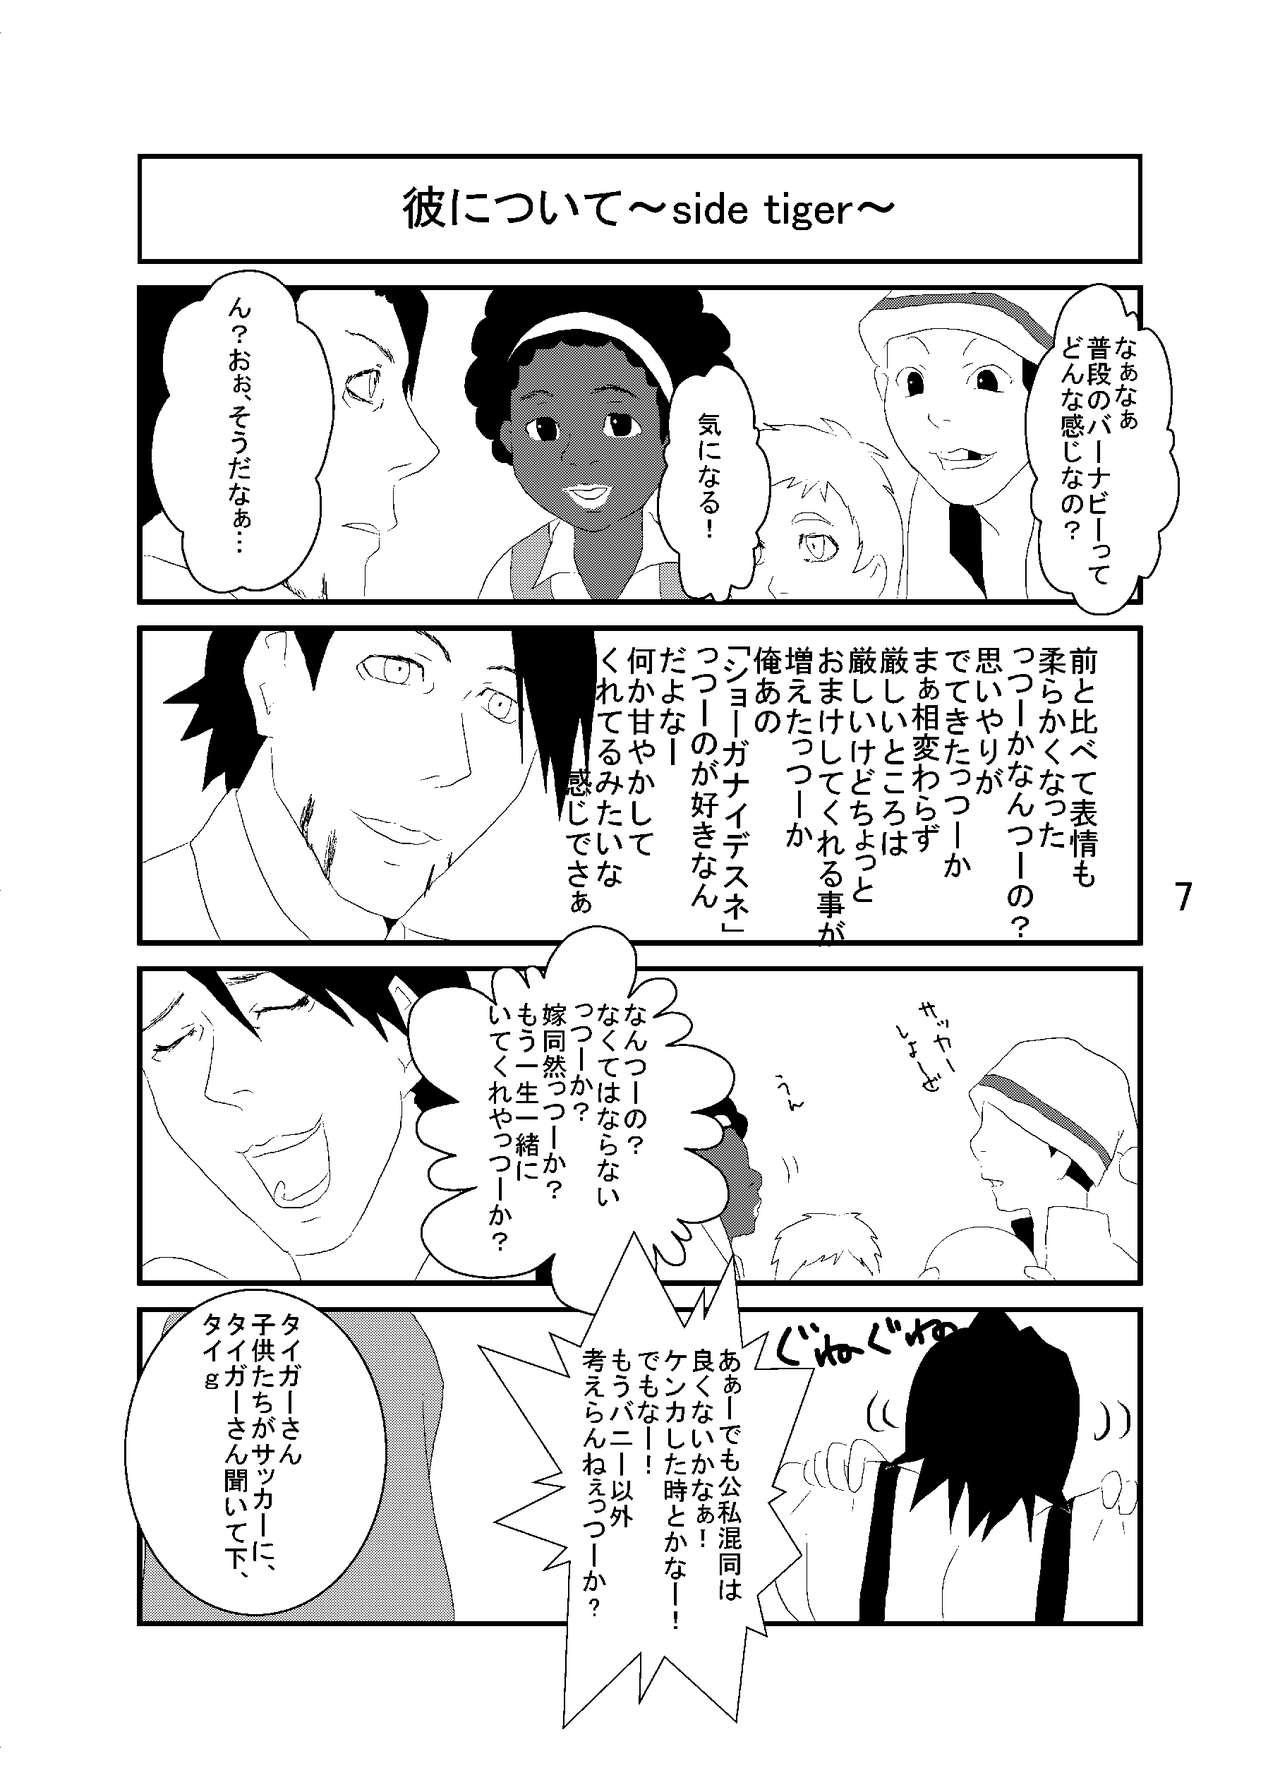 Chudai Web Sairoku Tora Umoto Sono 2 - Tiger and bunny Doctor - Page 7